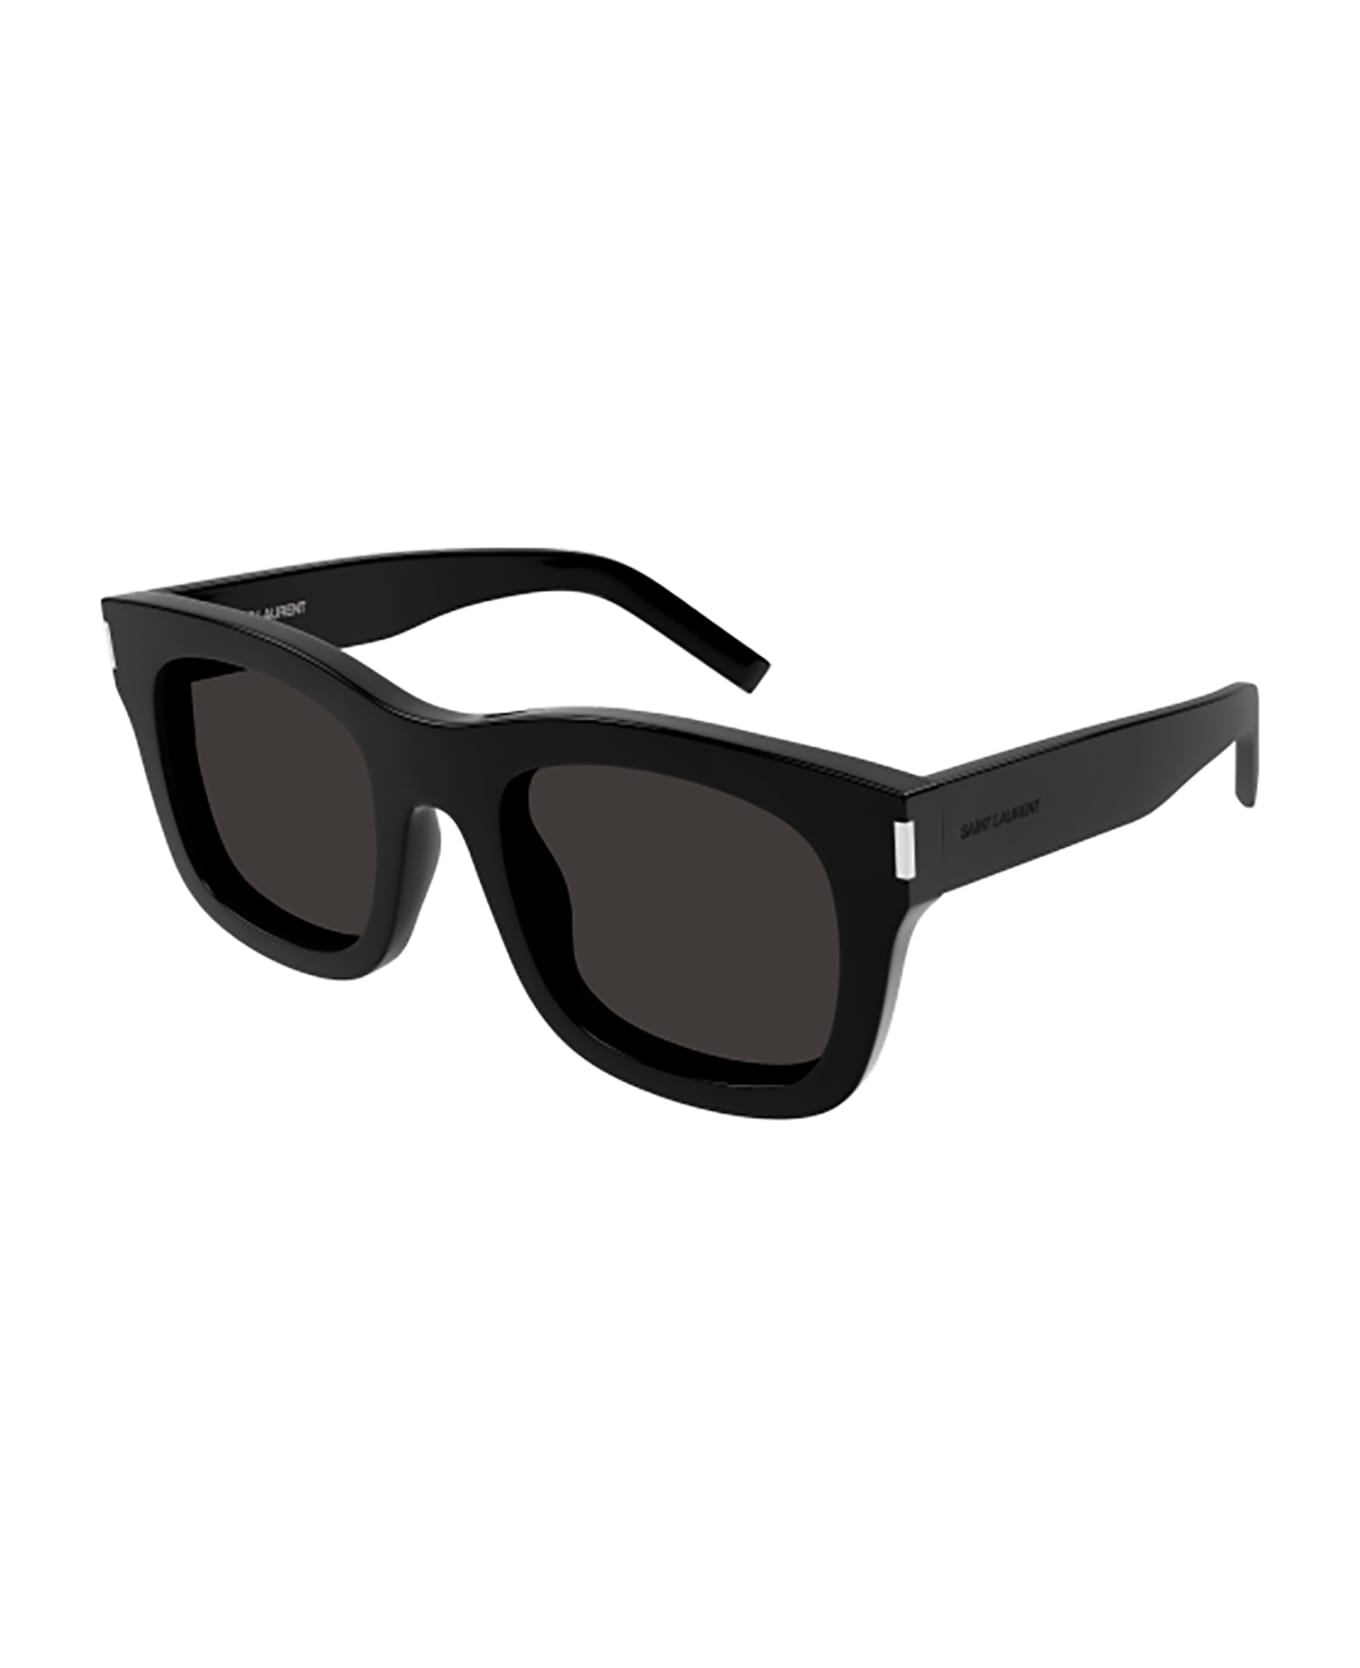 Saint Laurent Eyewear SL 650 MONCEAU Sunglasses - Black Black Black